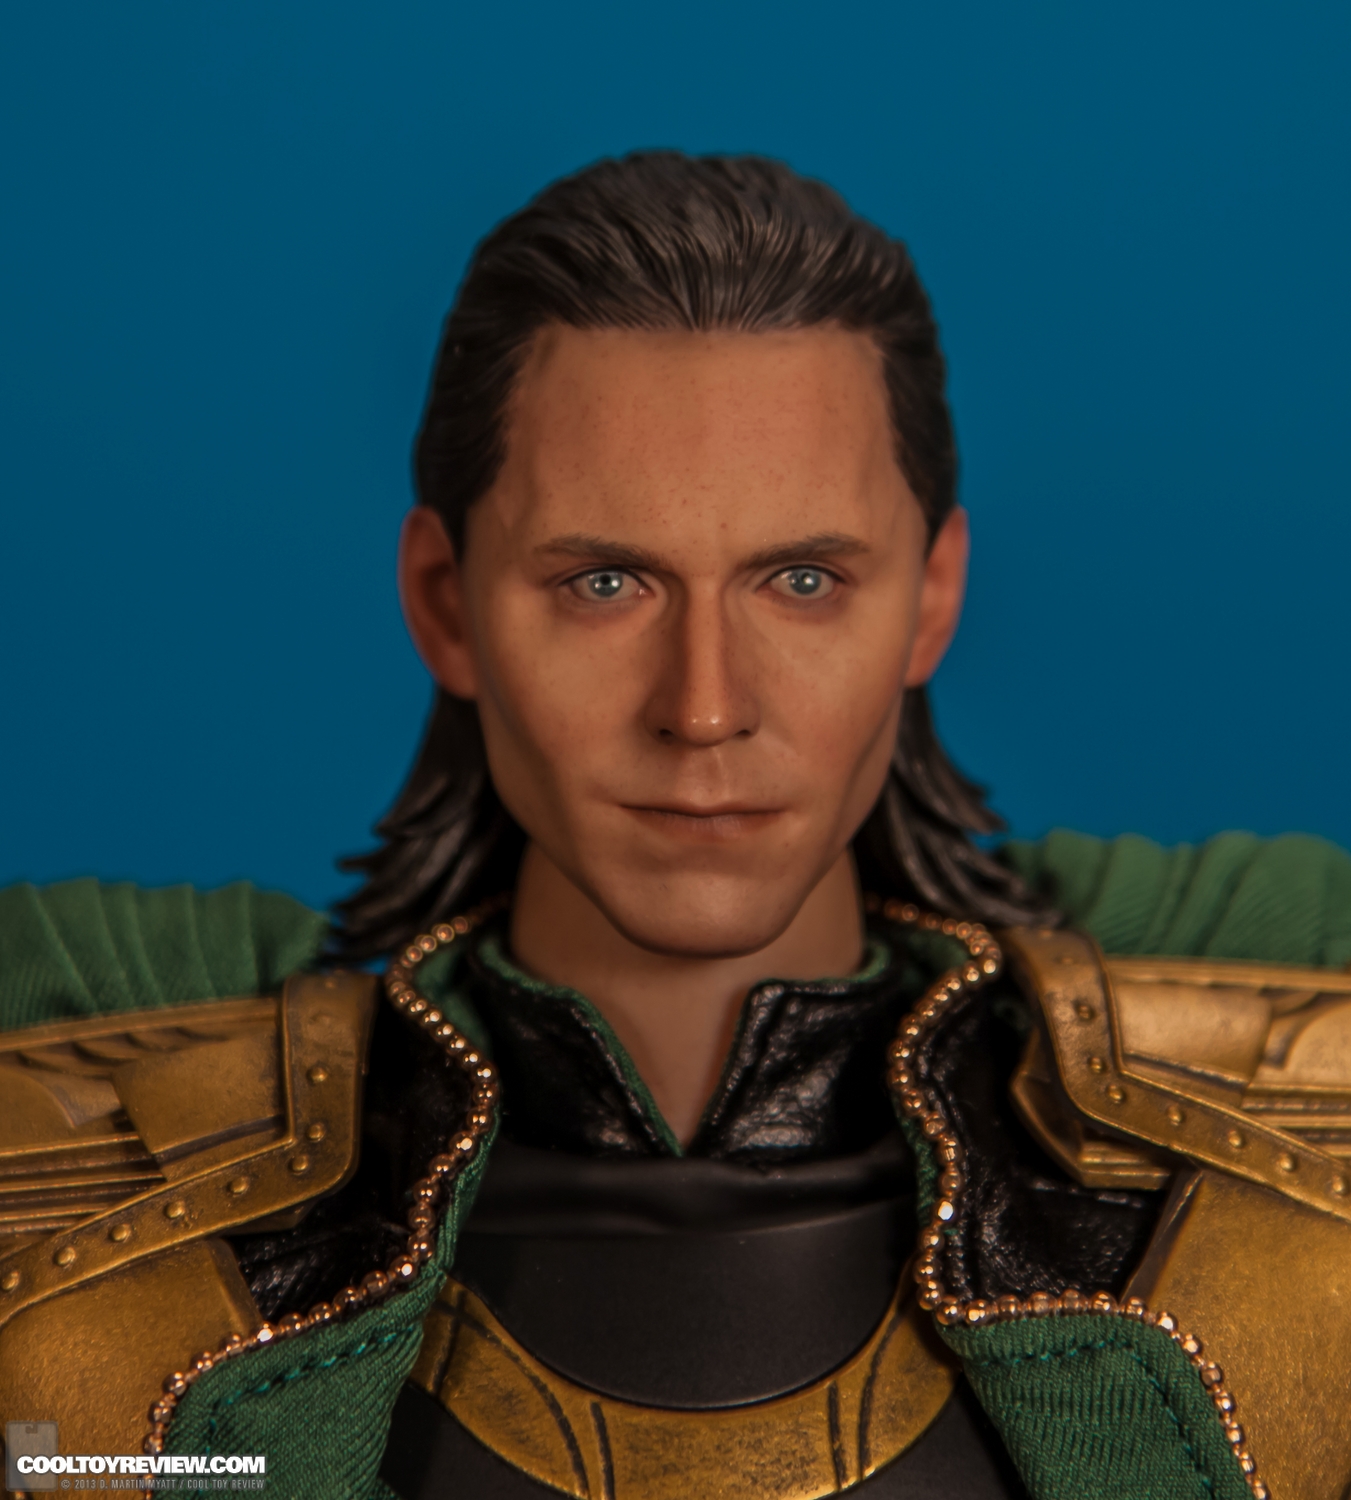 Loki-Avengers-Movie-Masterpiece-Series-Hot-Toys-009.jpg